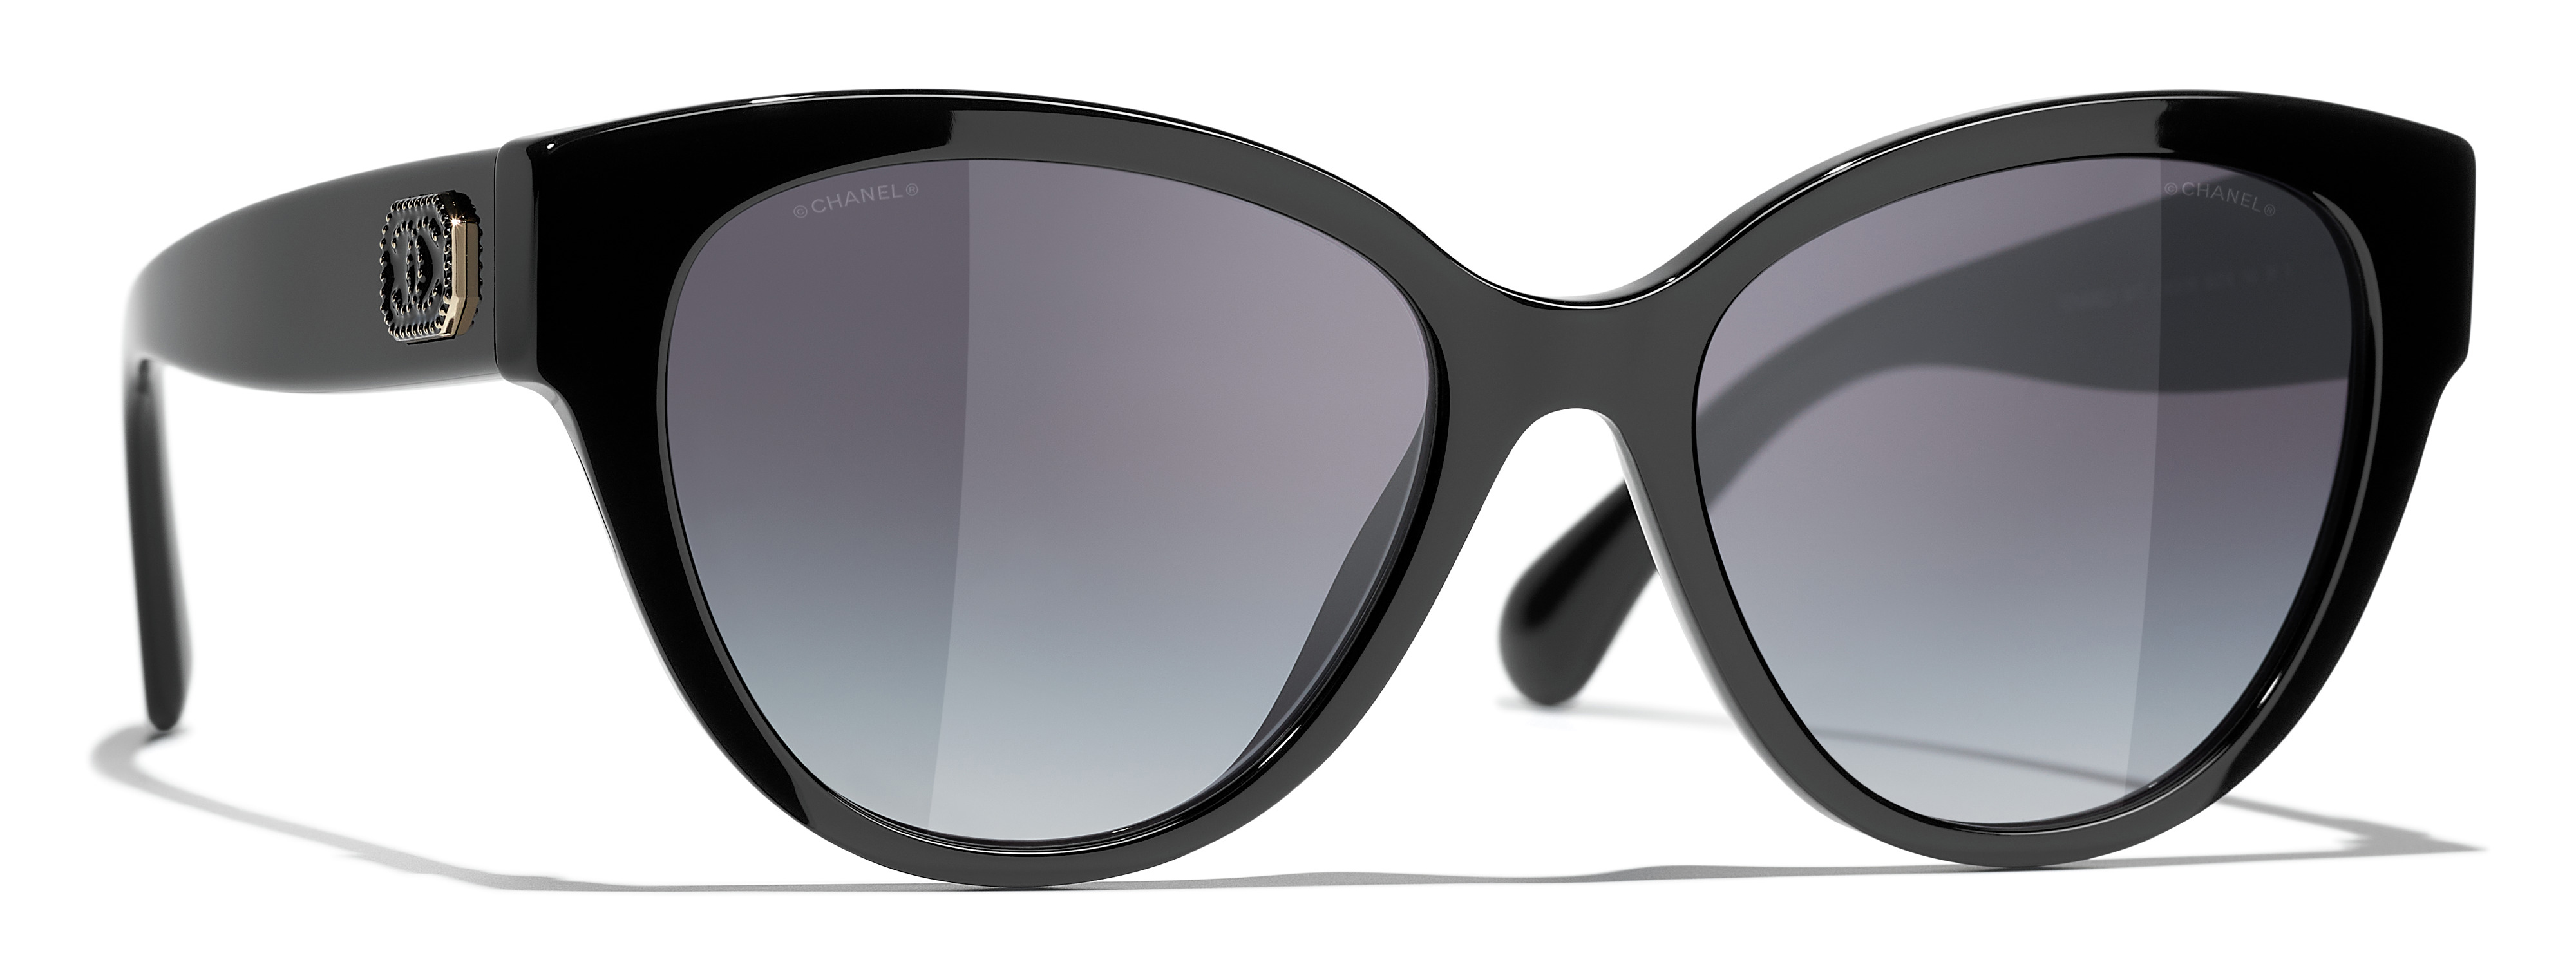 black white chanel sunglasses